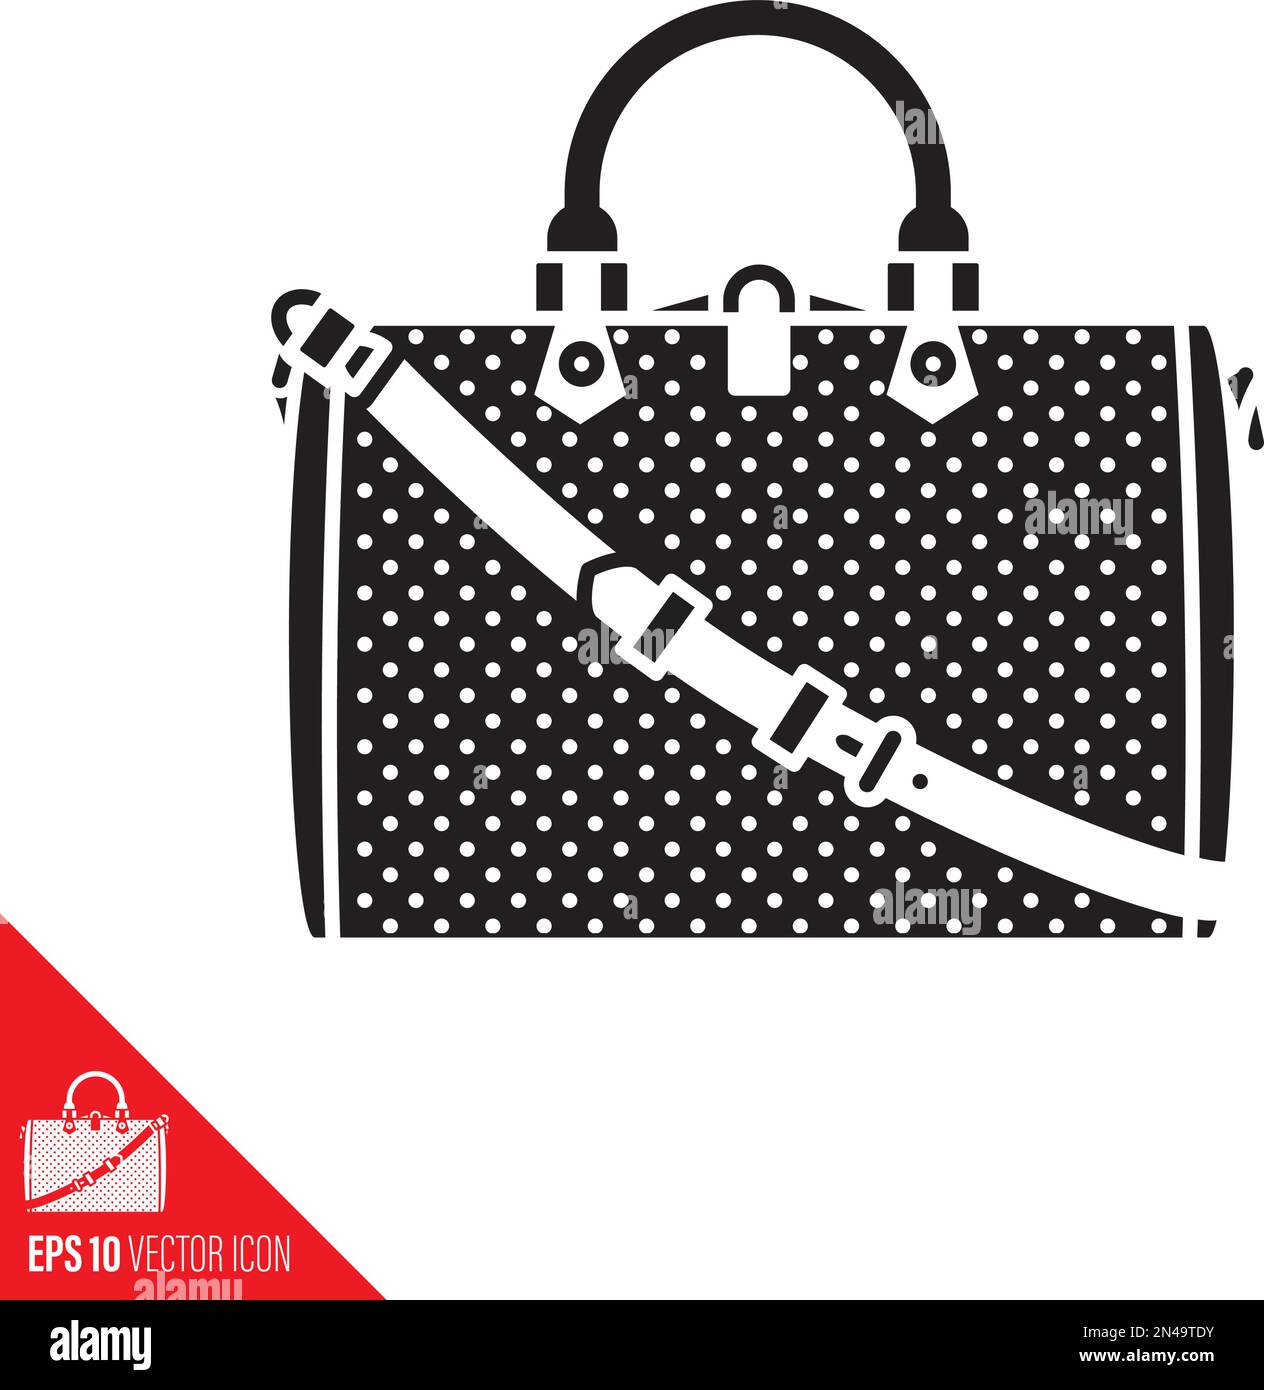 Luxury designer handbag Stock Vector Images - Alamy